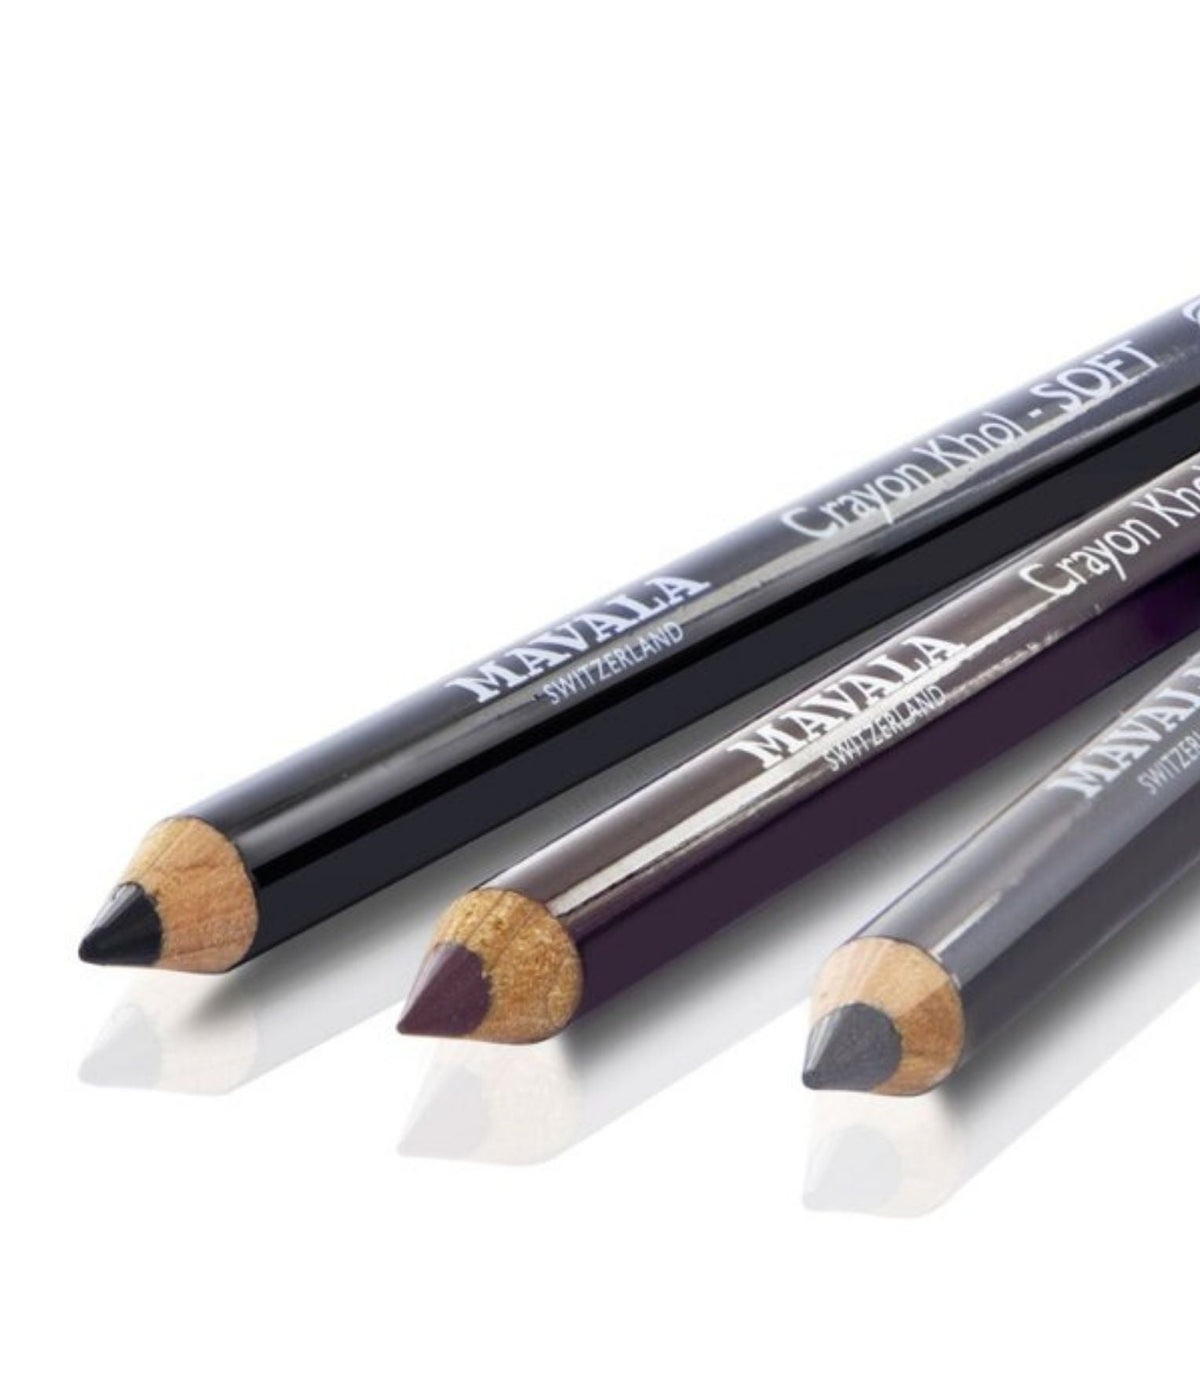 Soft Khol Pencil Intense Black 1.2g